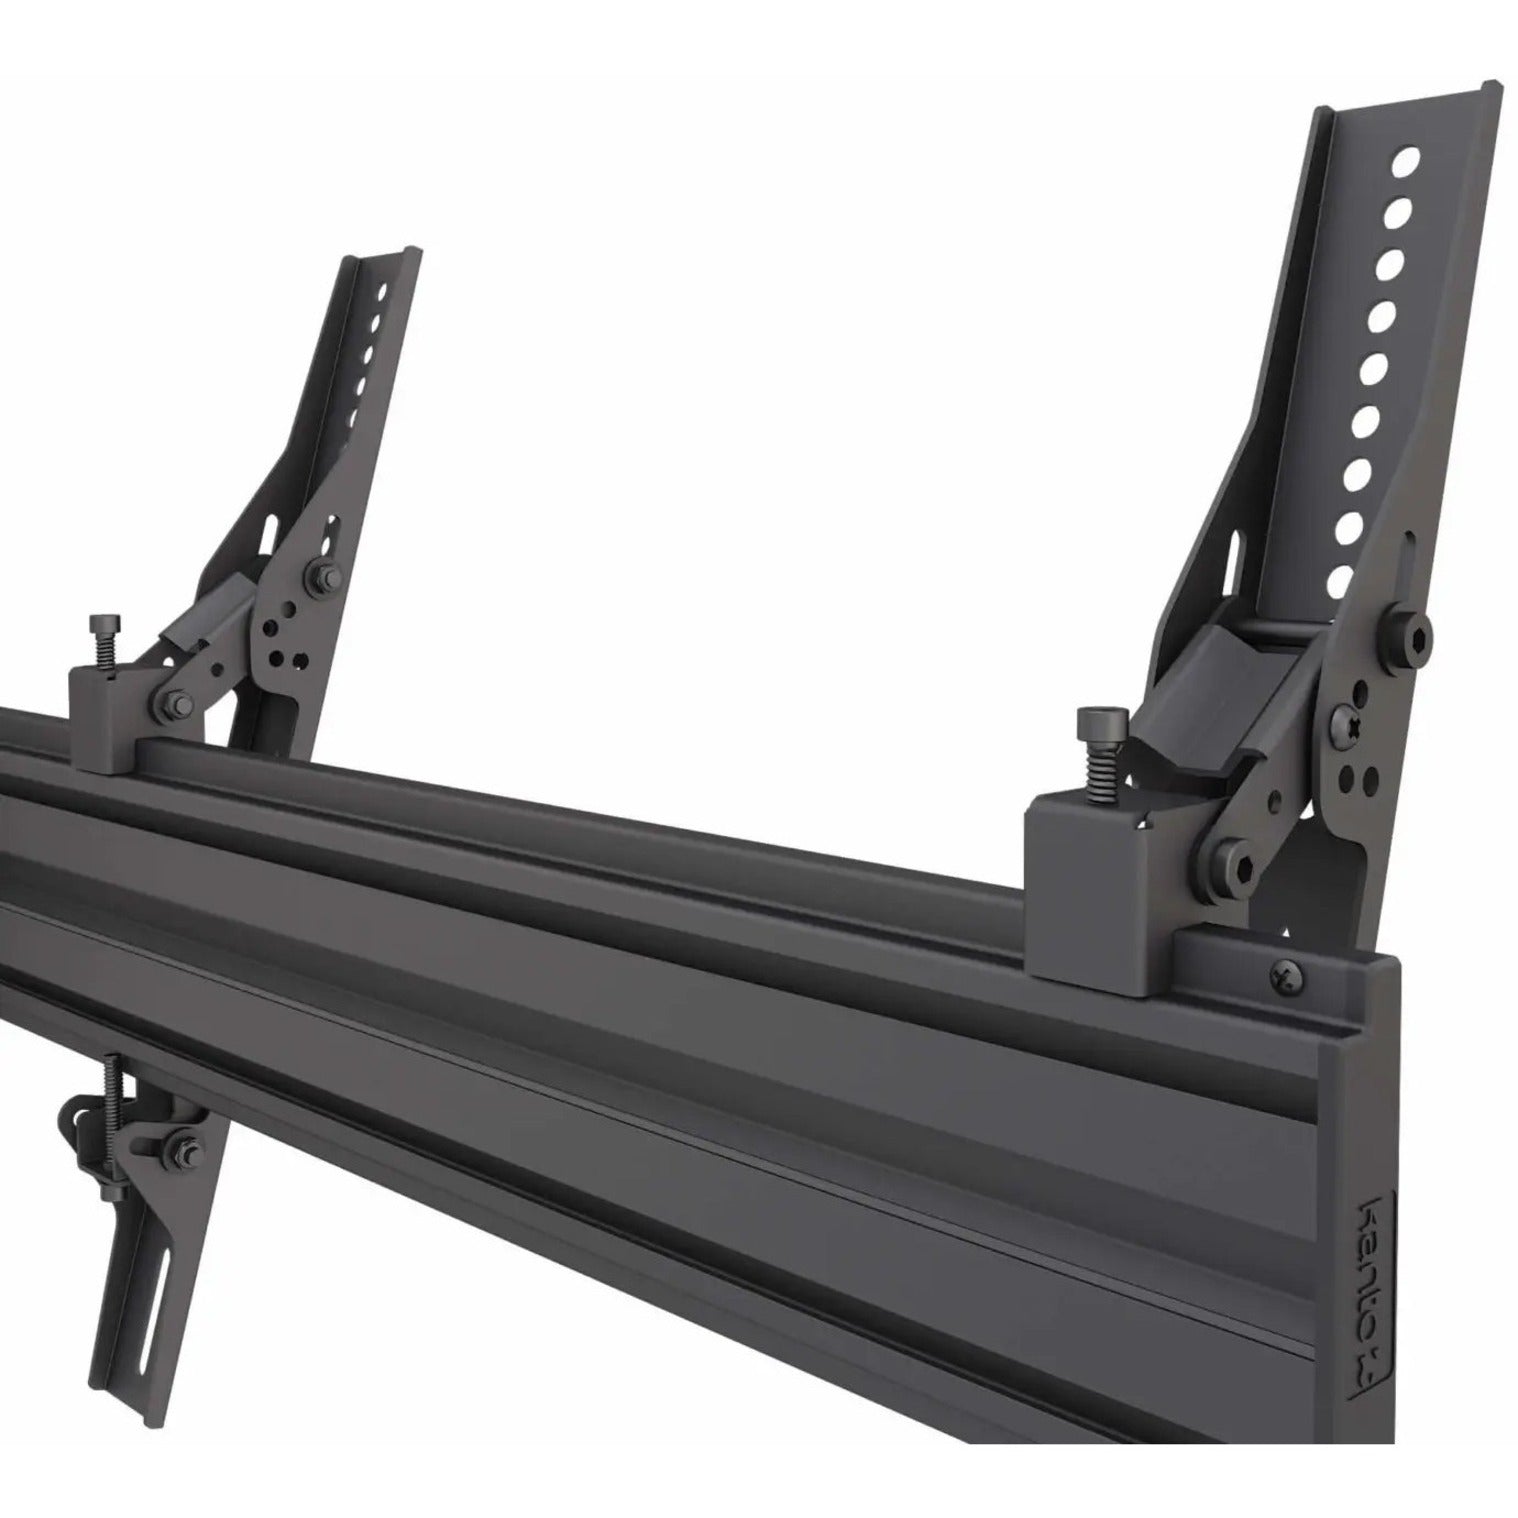 Kanto MBC211T Menu Board Ceiling Mount System, Telescoping, Lightweight, 132 lb Maximum Load Capacity